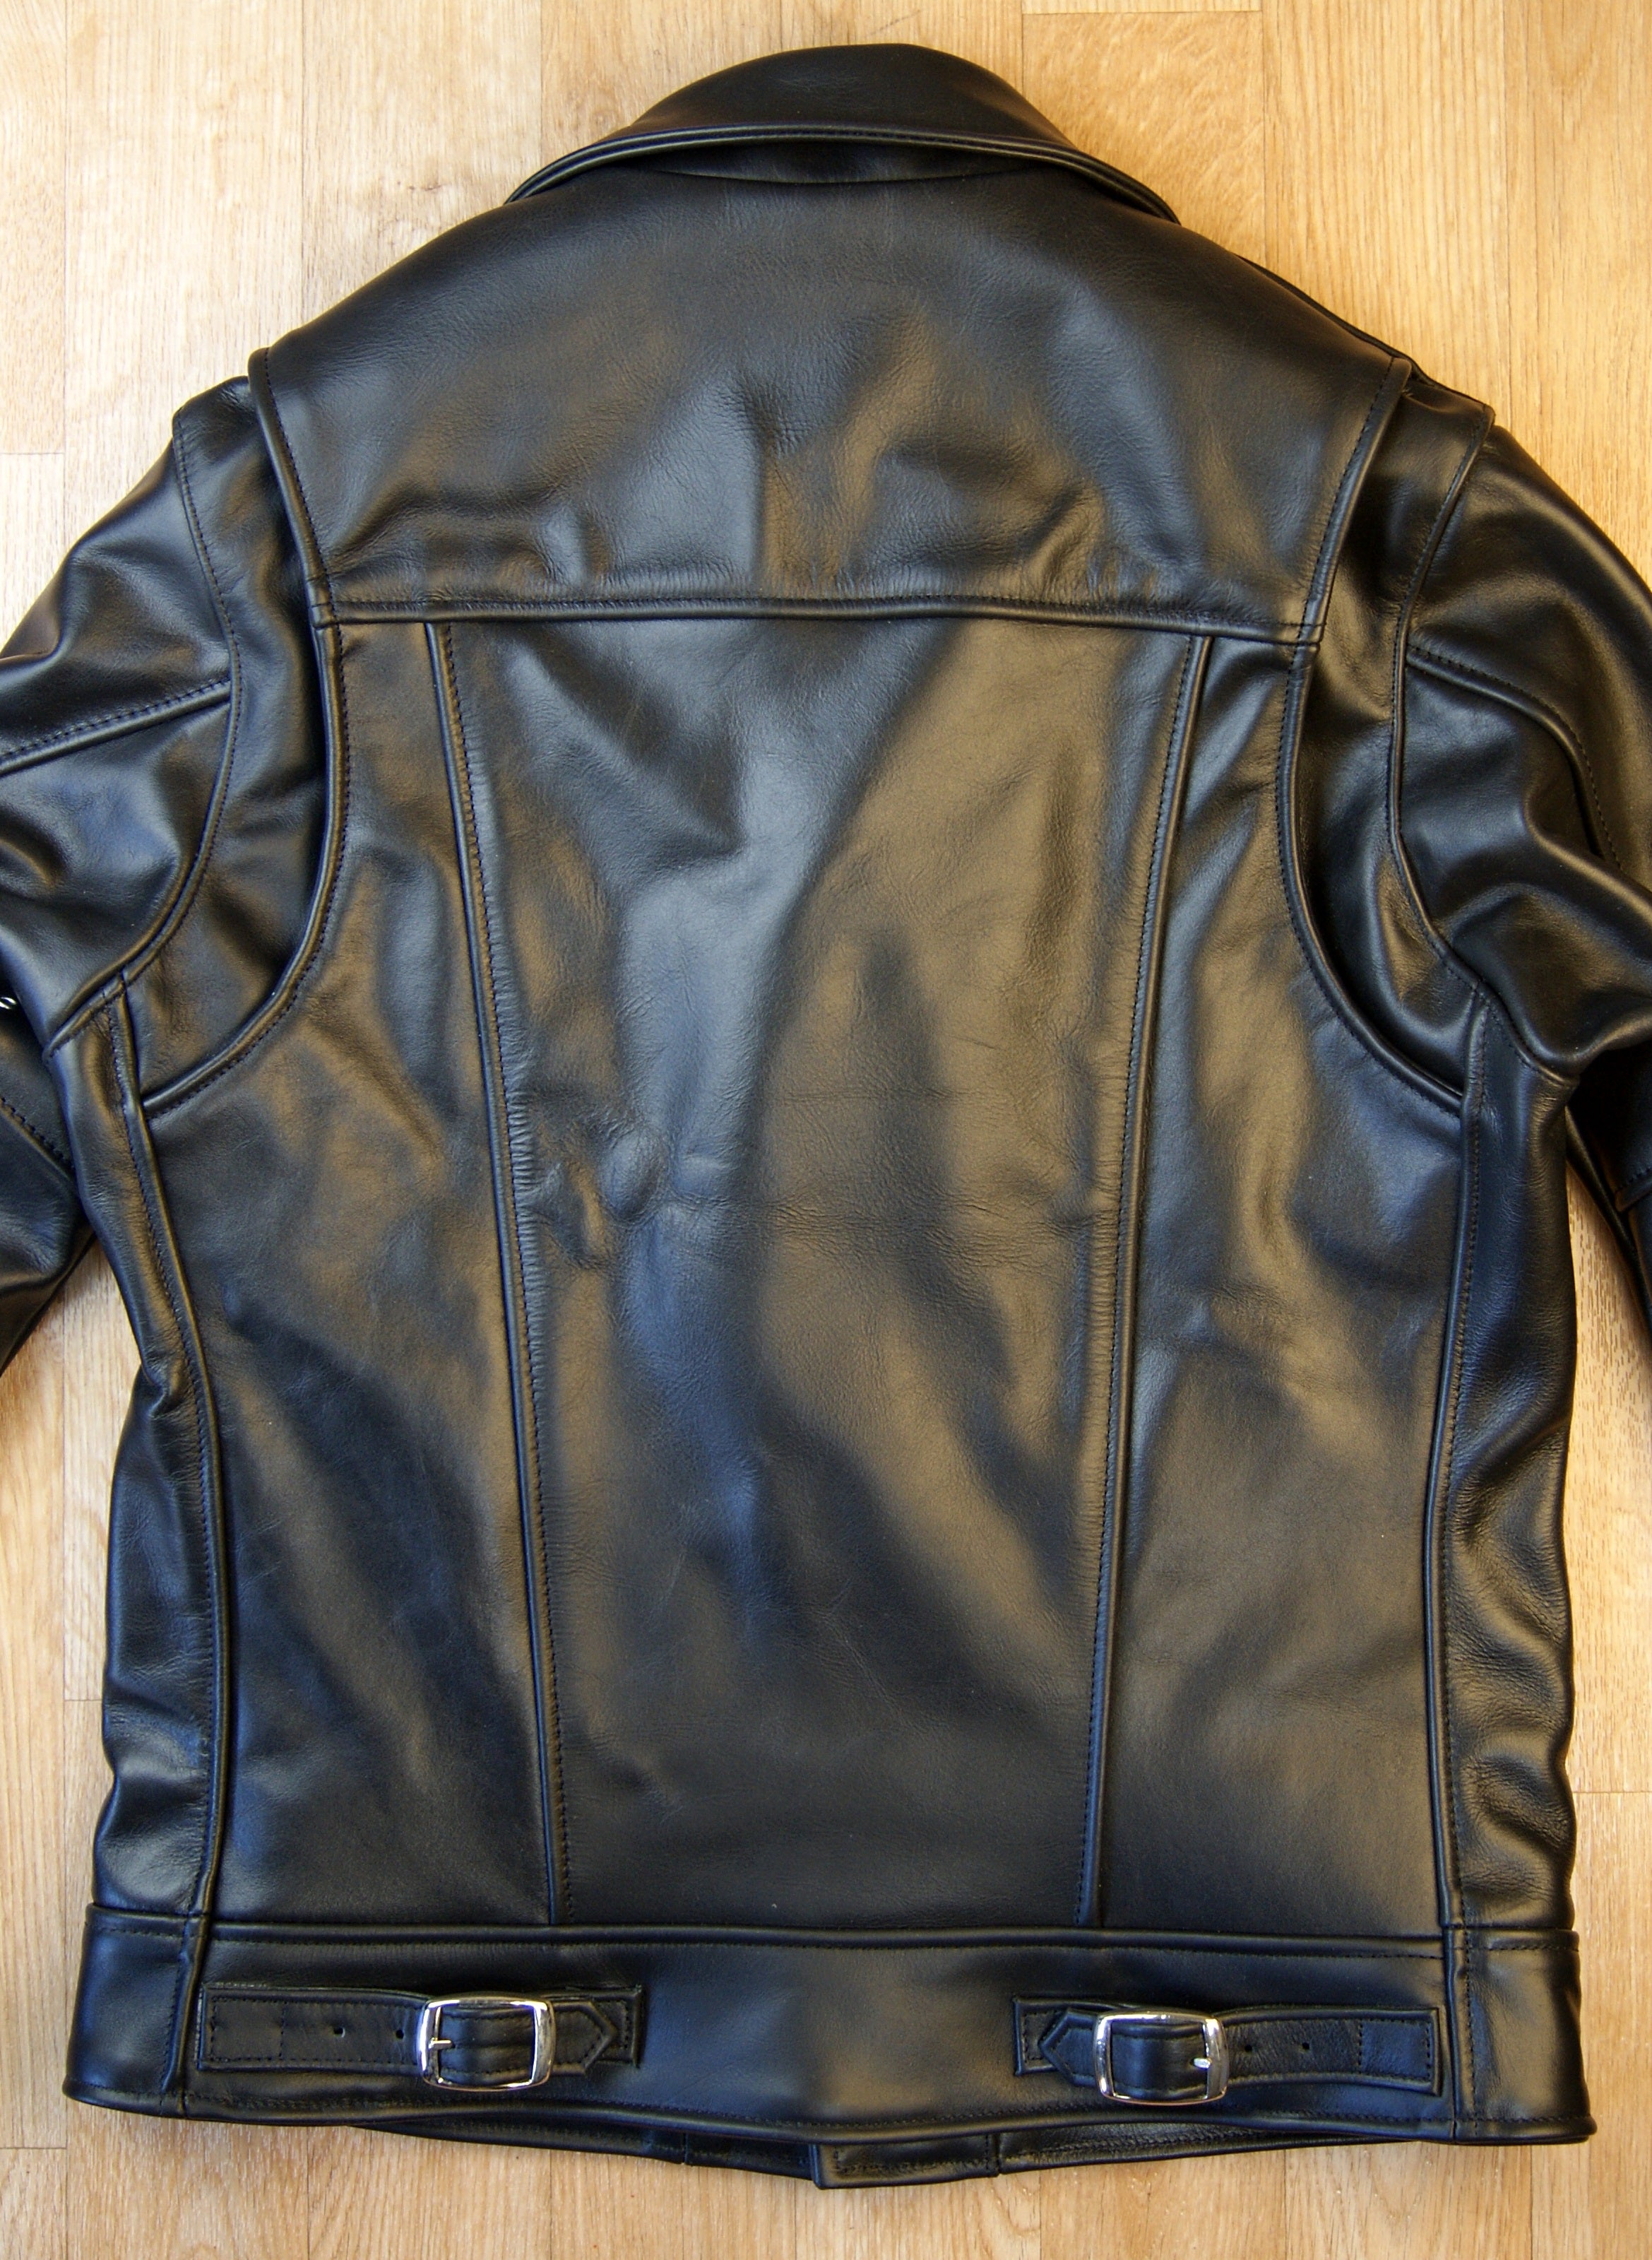 Black of black leather motorcycle jacket.  Shoulder gussets that open.  Small buckles at bottom hem.